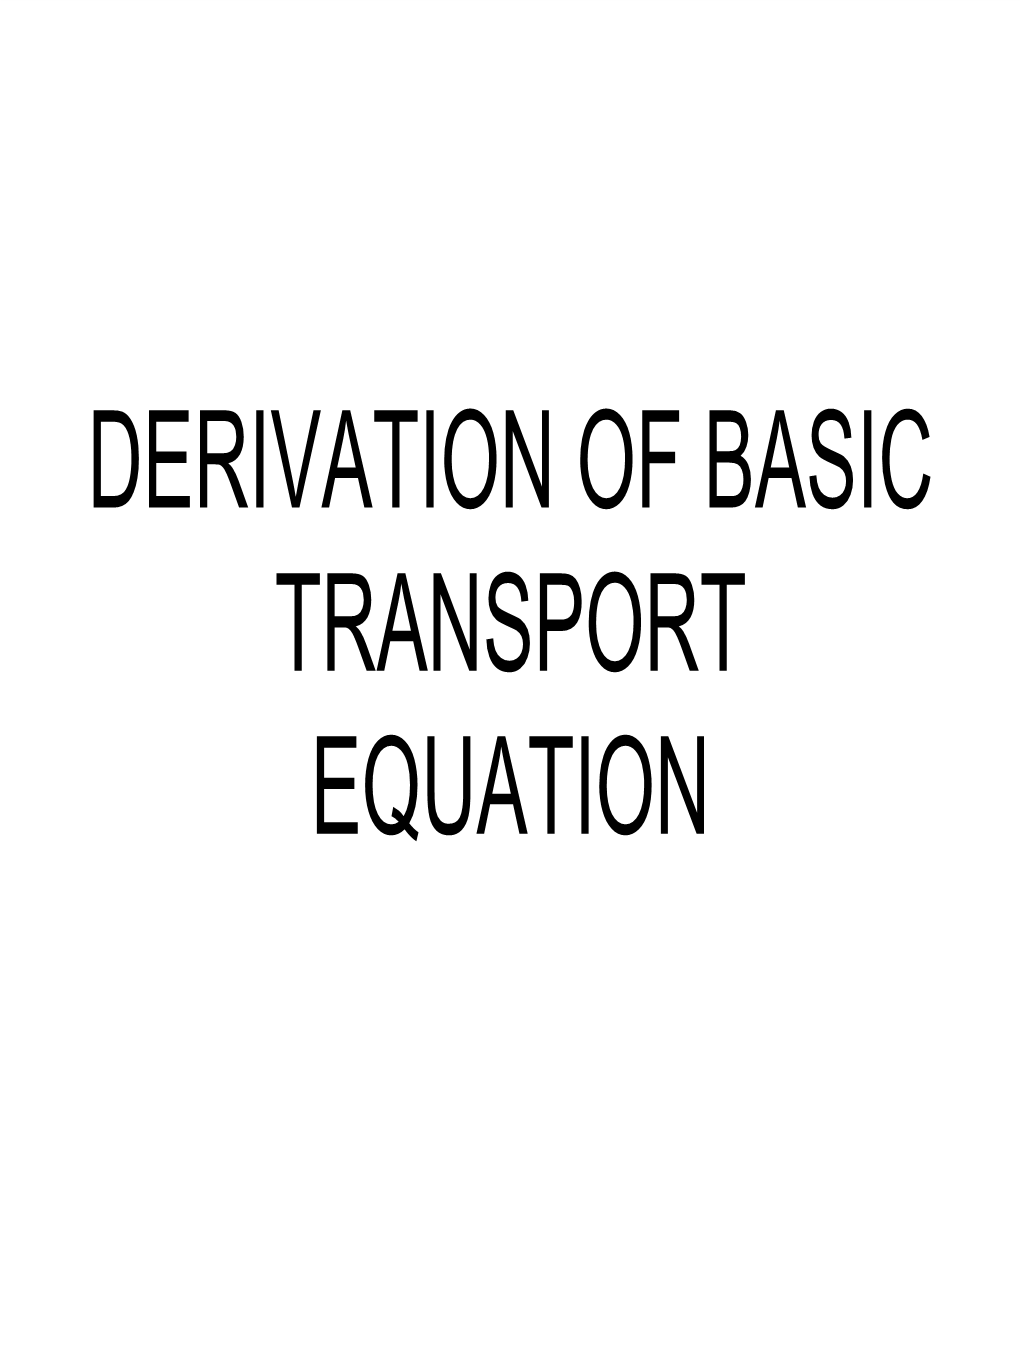 Derivation of Basic Transport Equation